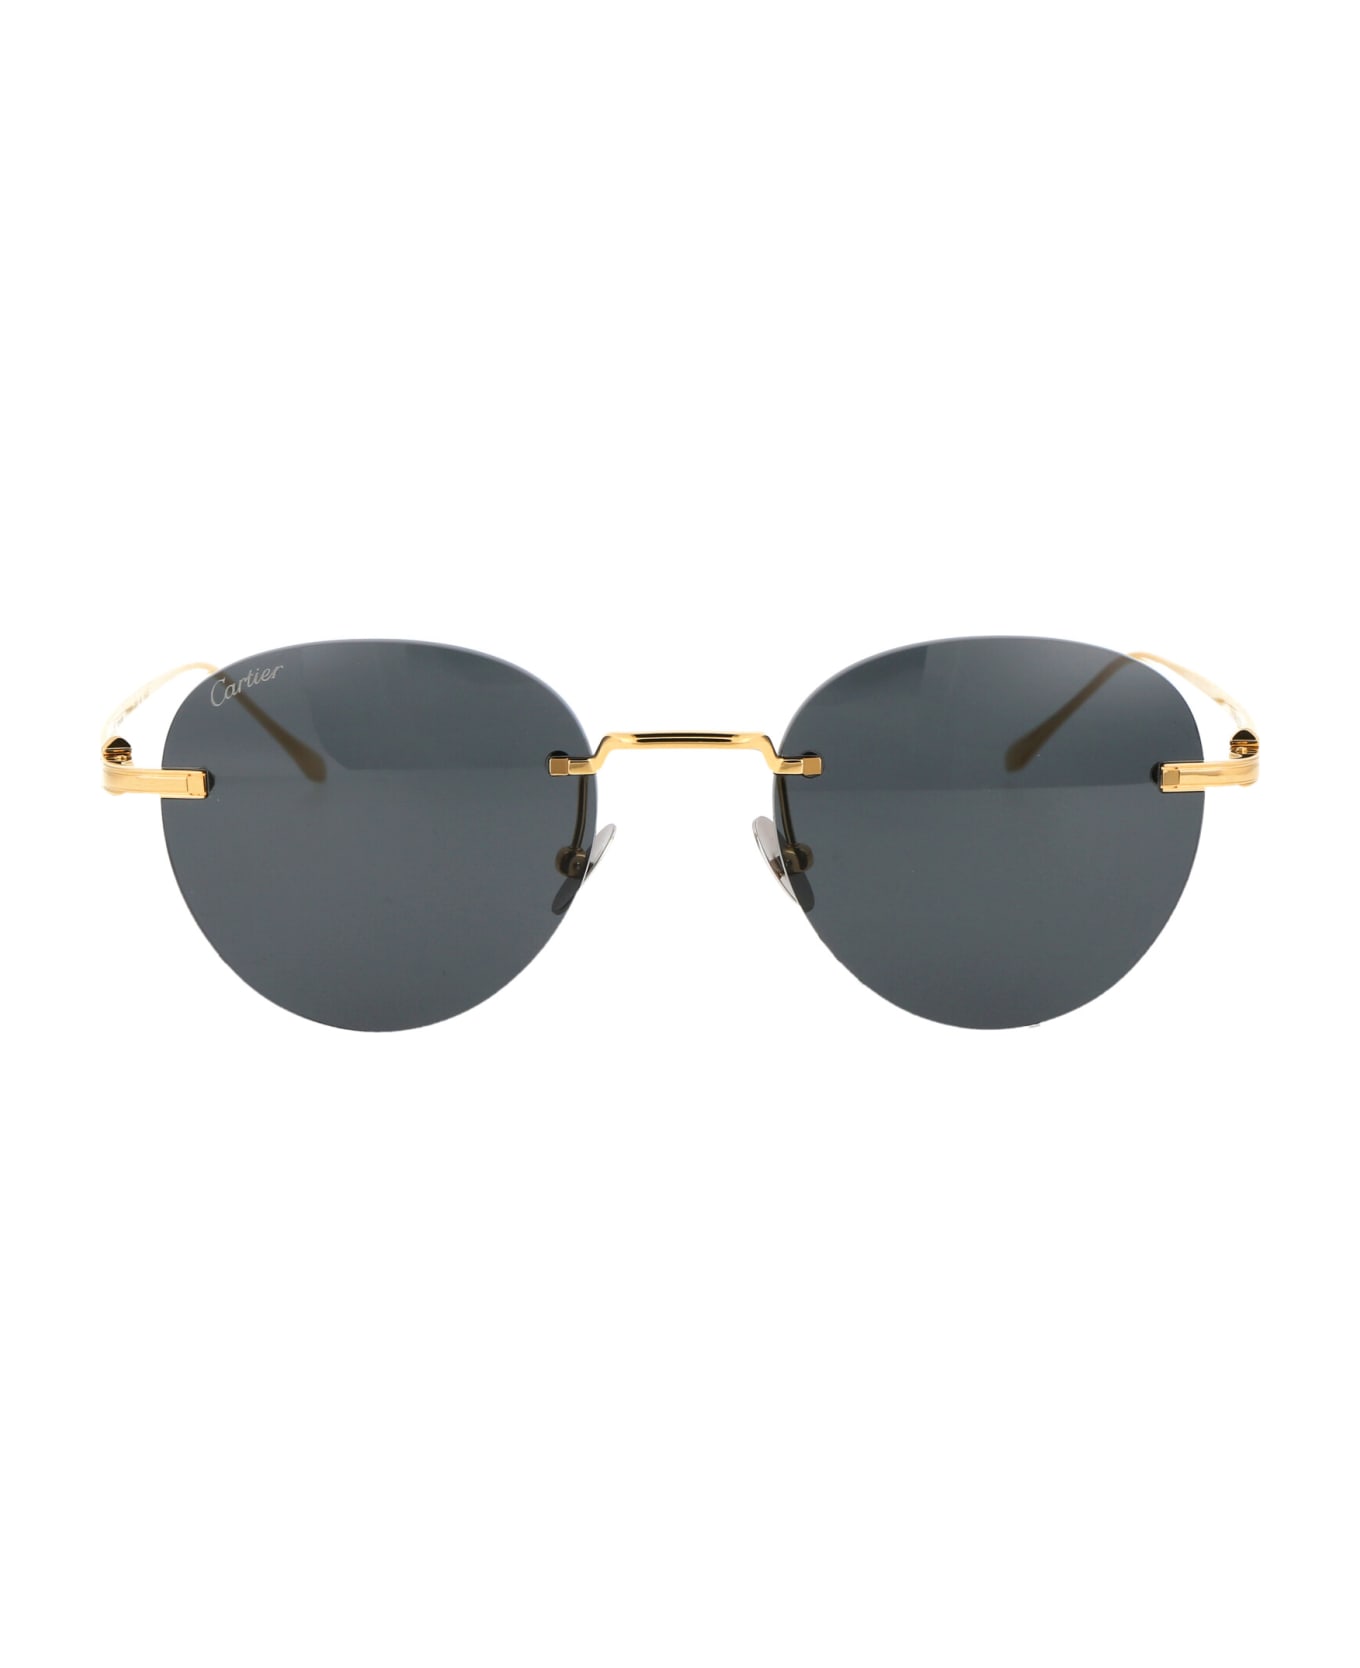 Cartier Eyewear Ct0331s Sunglasses - 002 GOLD GOLD GREY